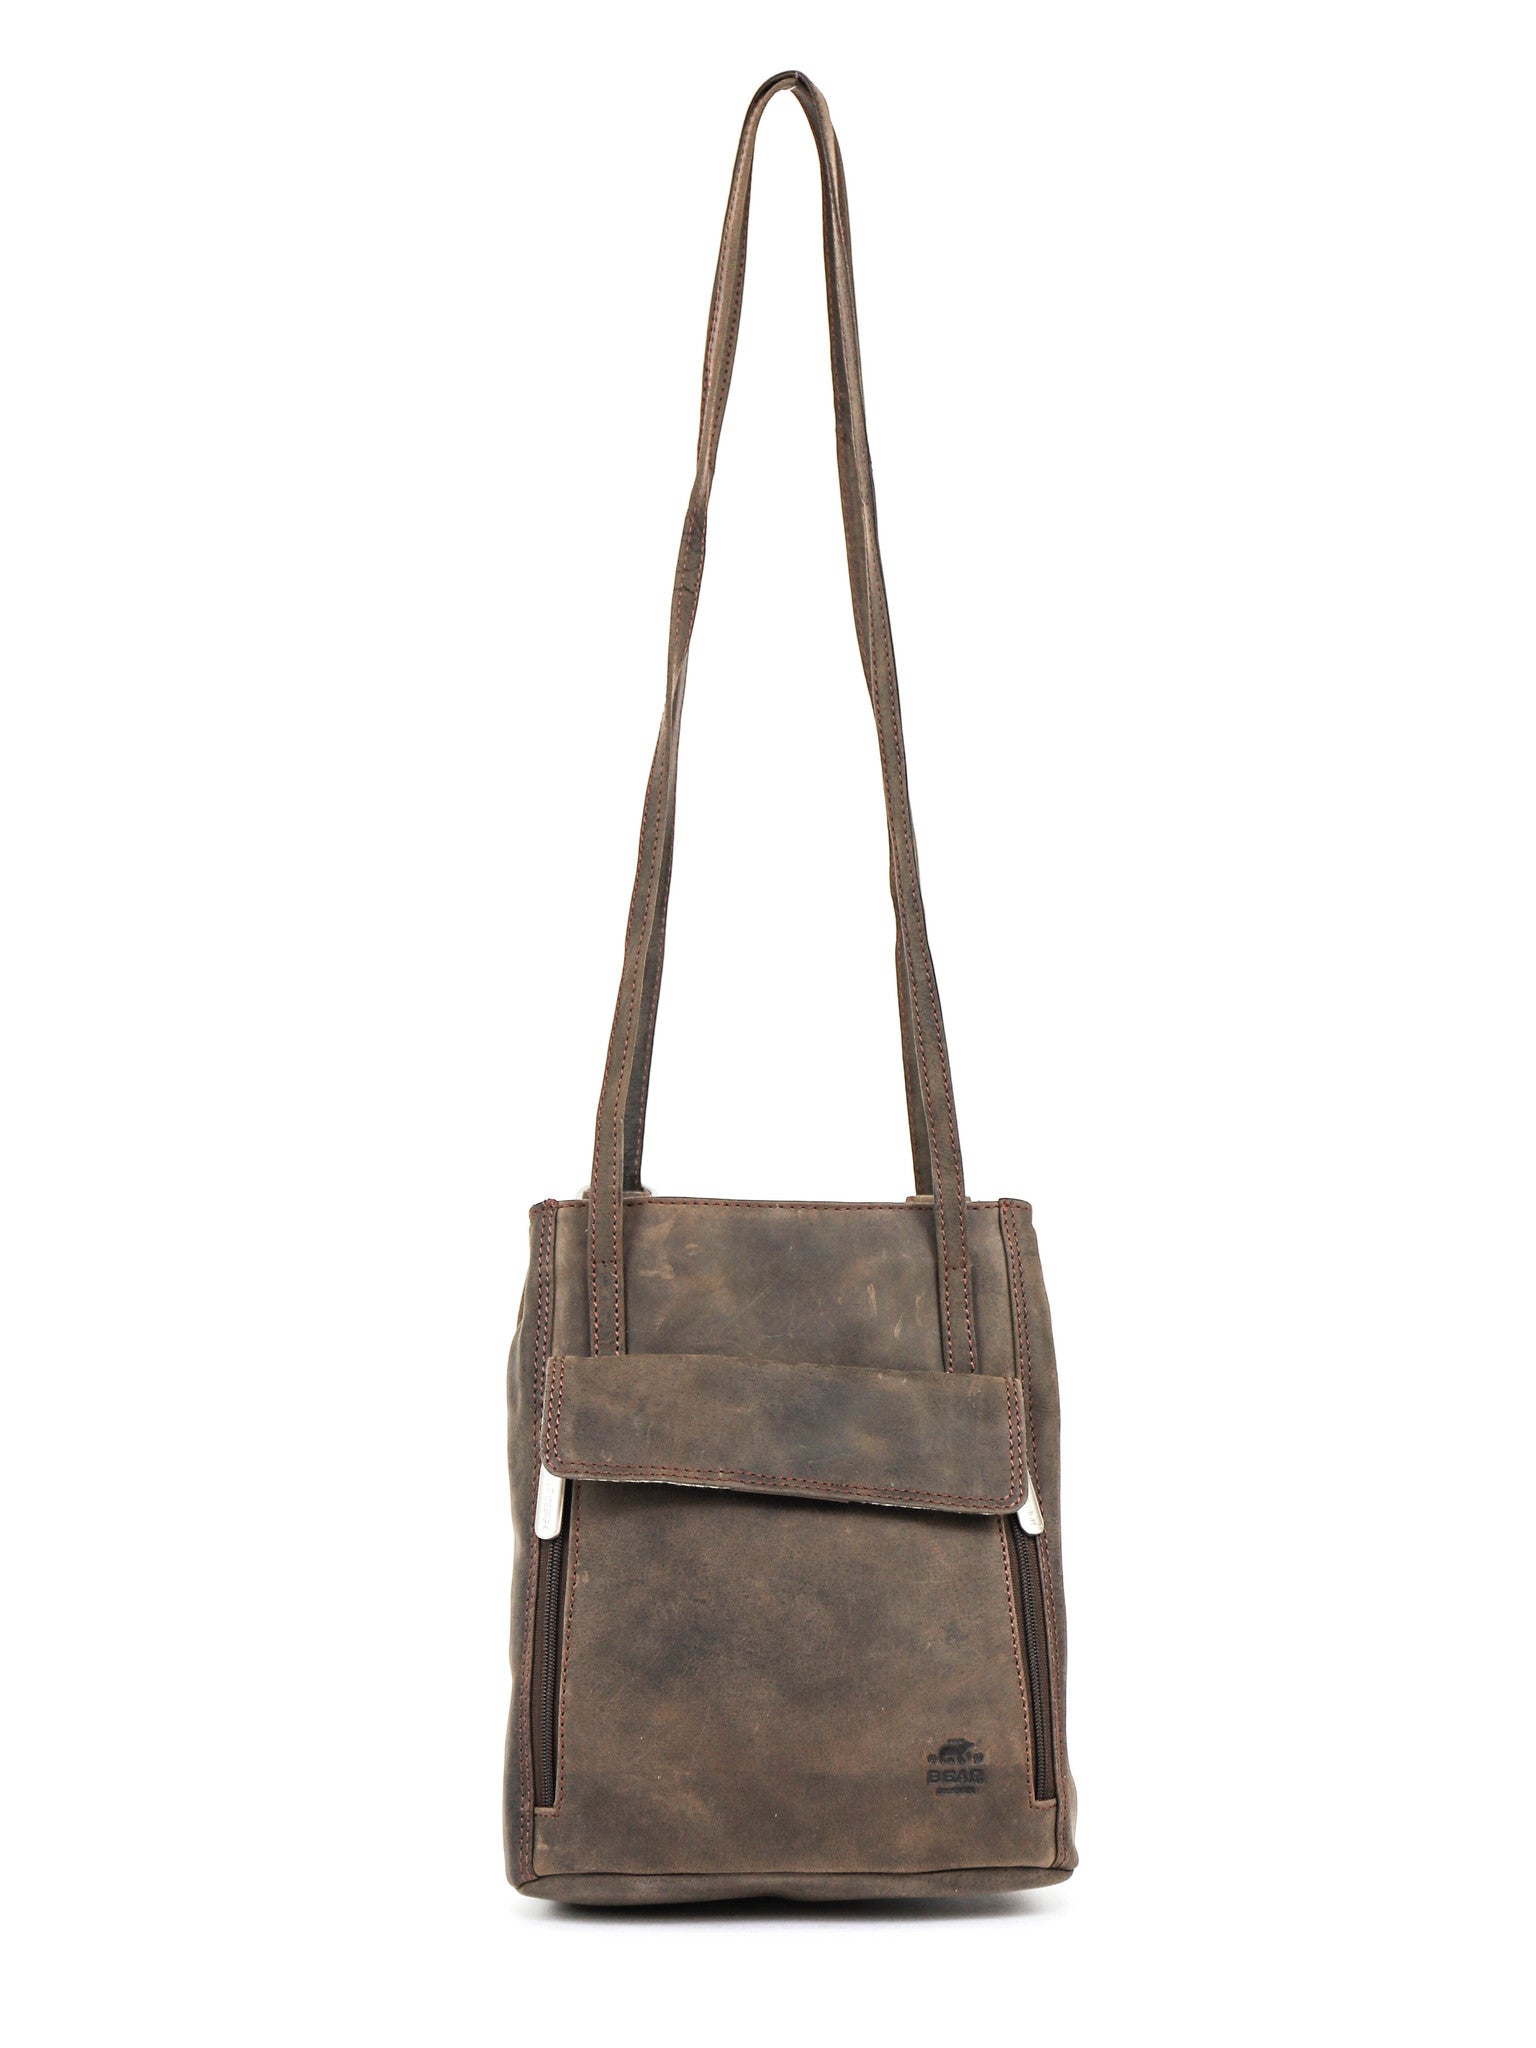 Backpack/shoulder bag 'Didi' brown - HD 6666